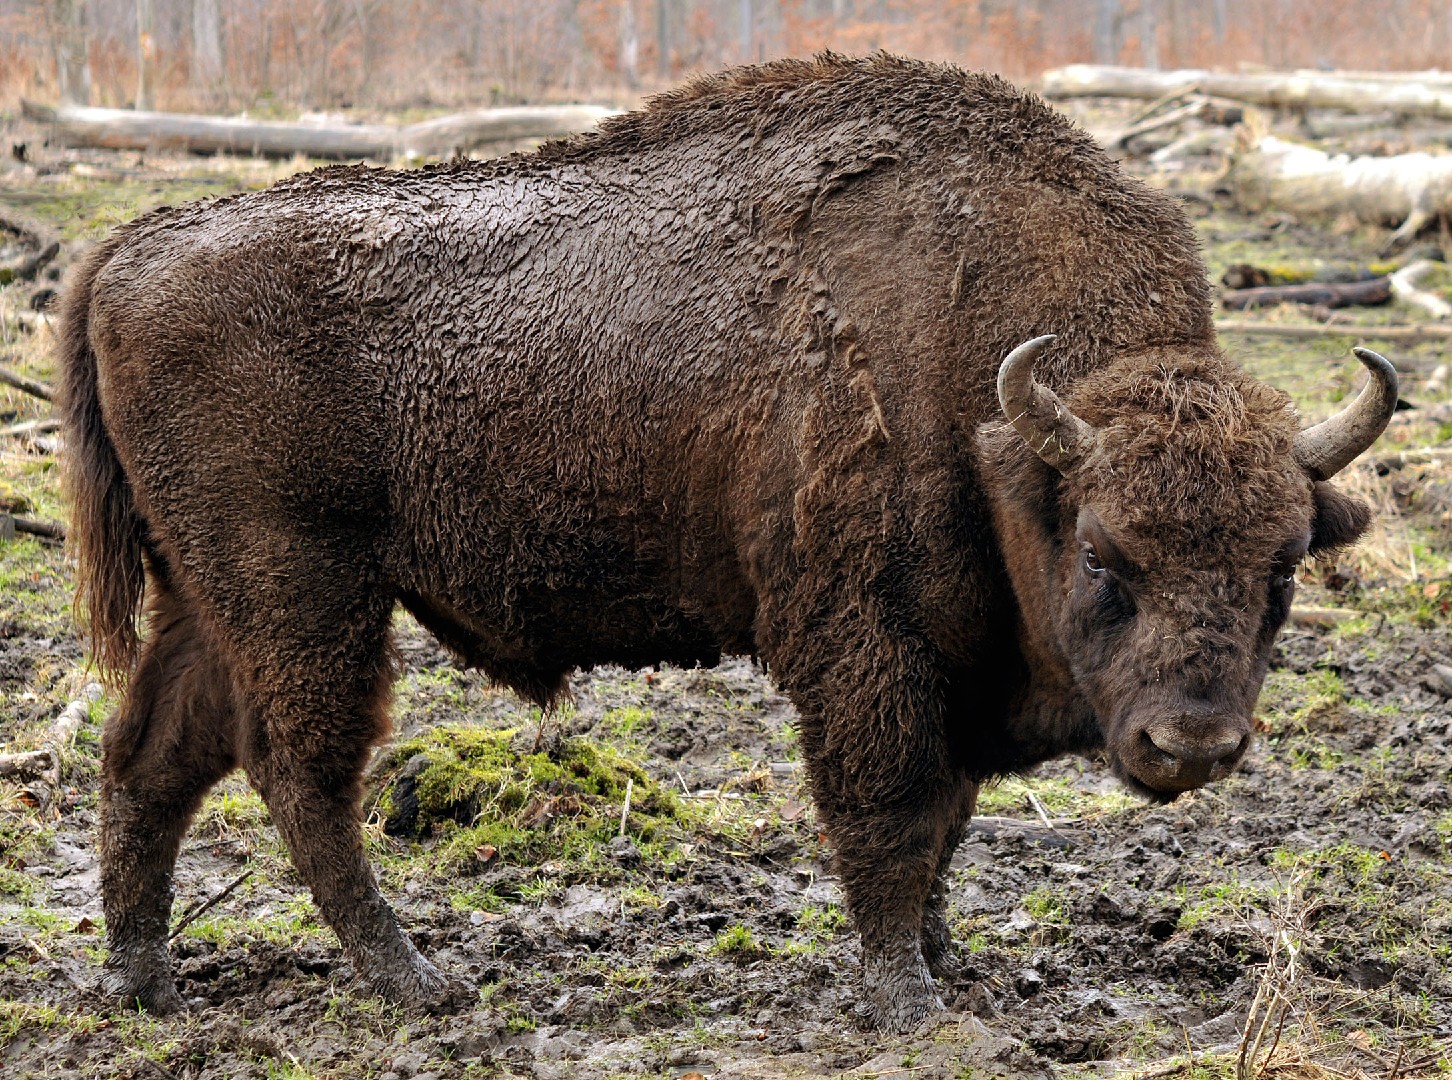 Buffalo (Bison)